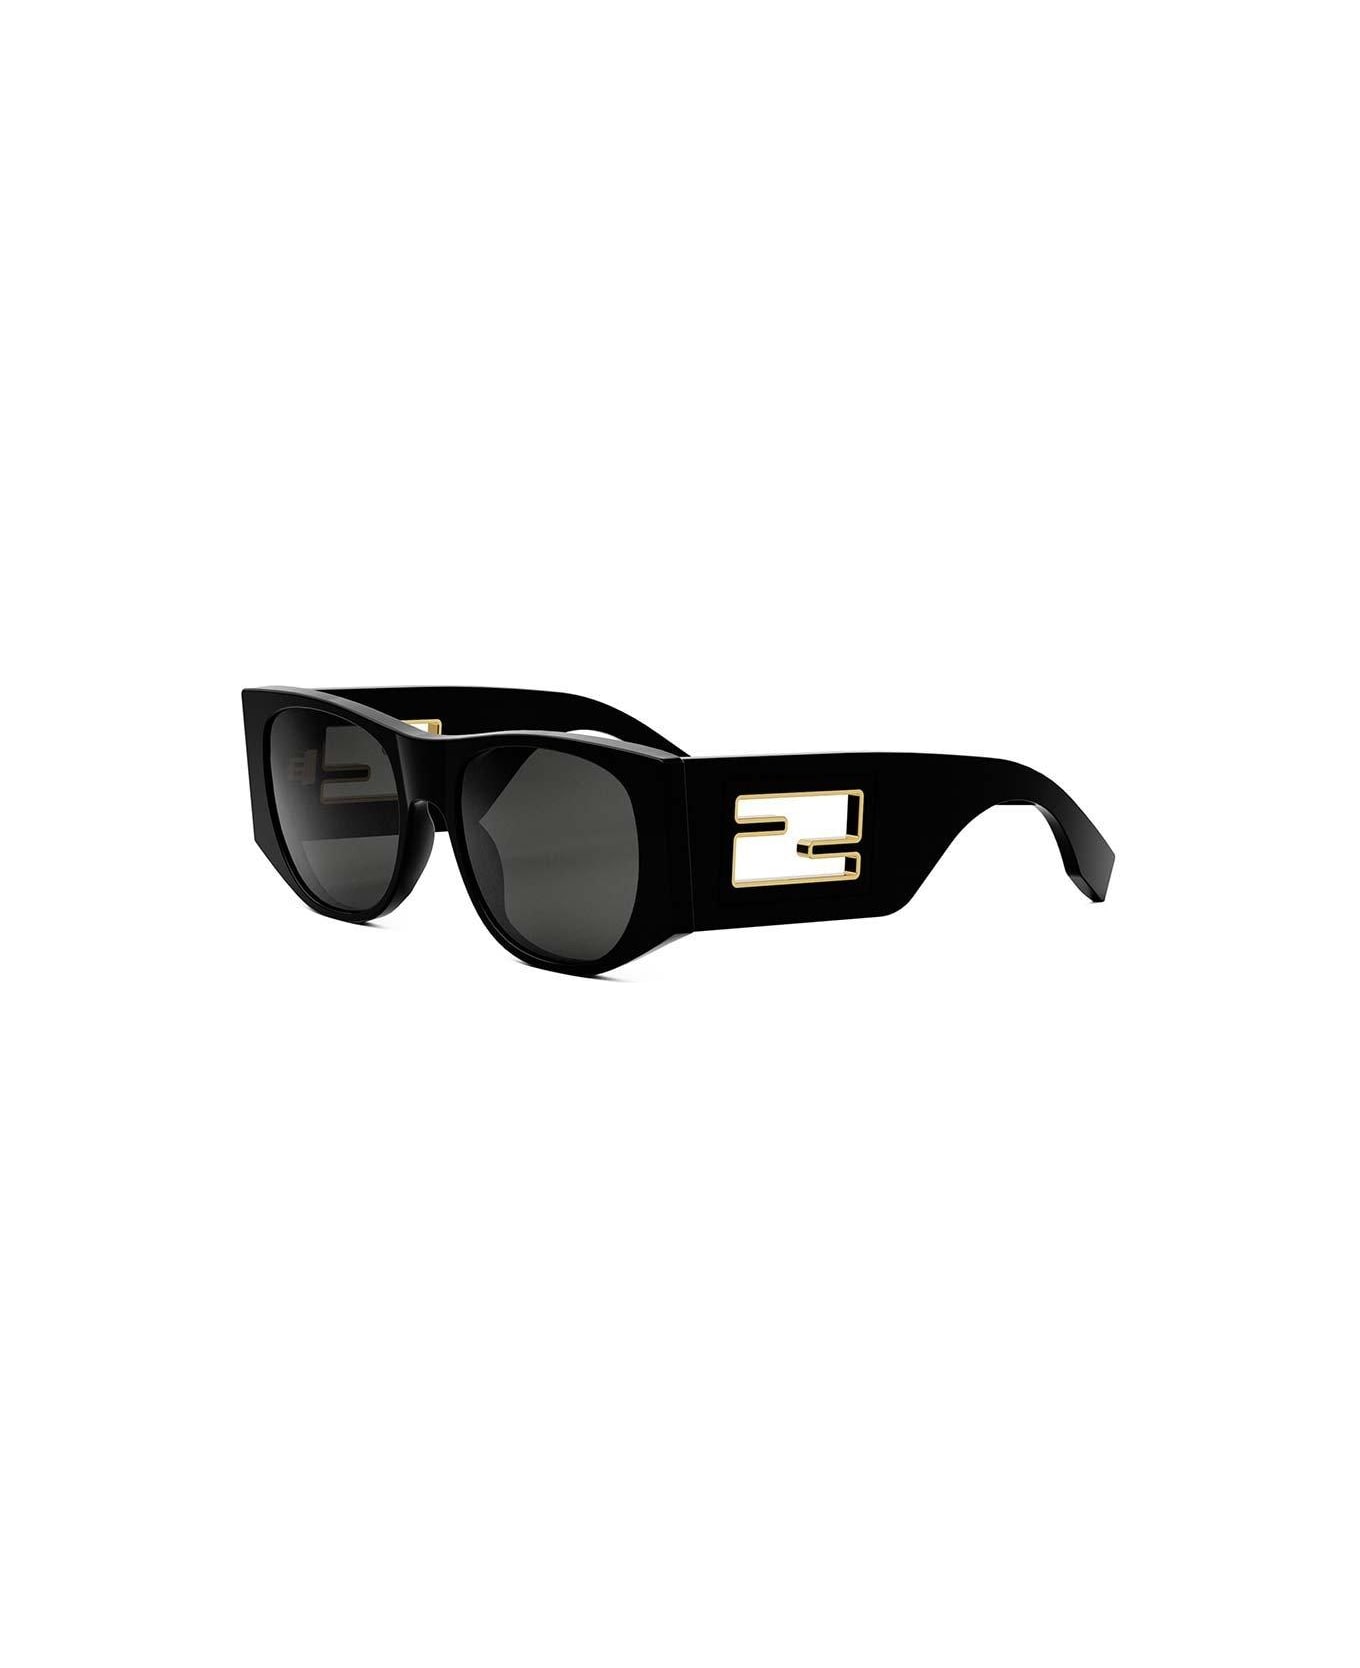 Fendi Eyewear Rectangle Frame Sunglasses - 01a サングラス